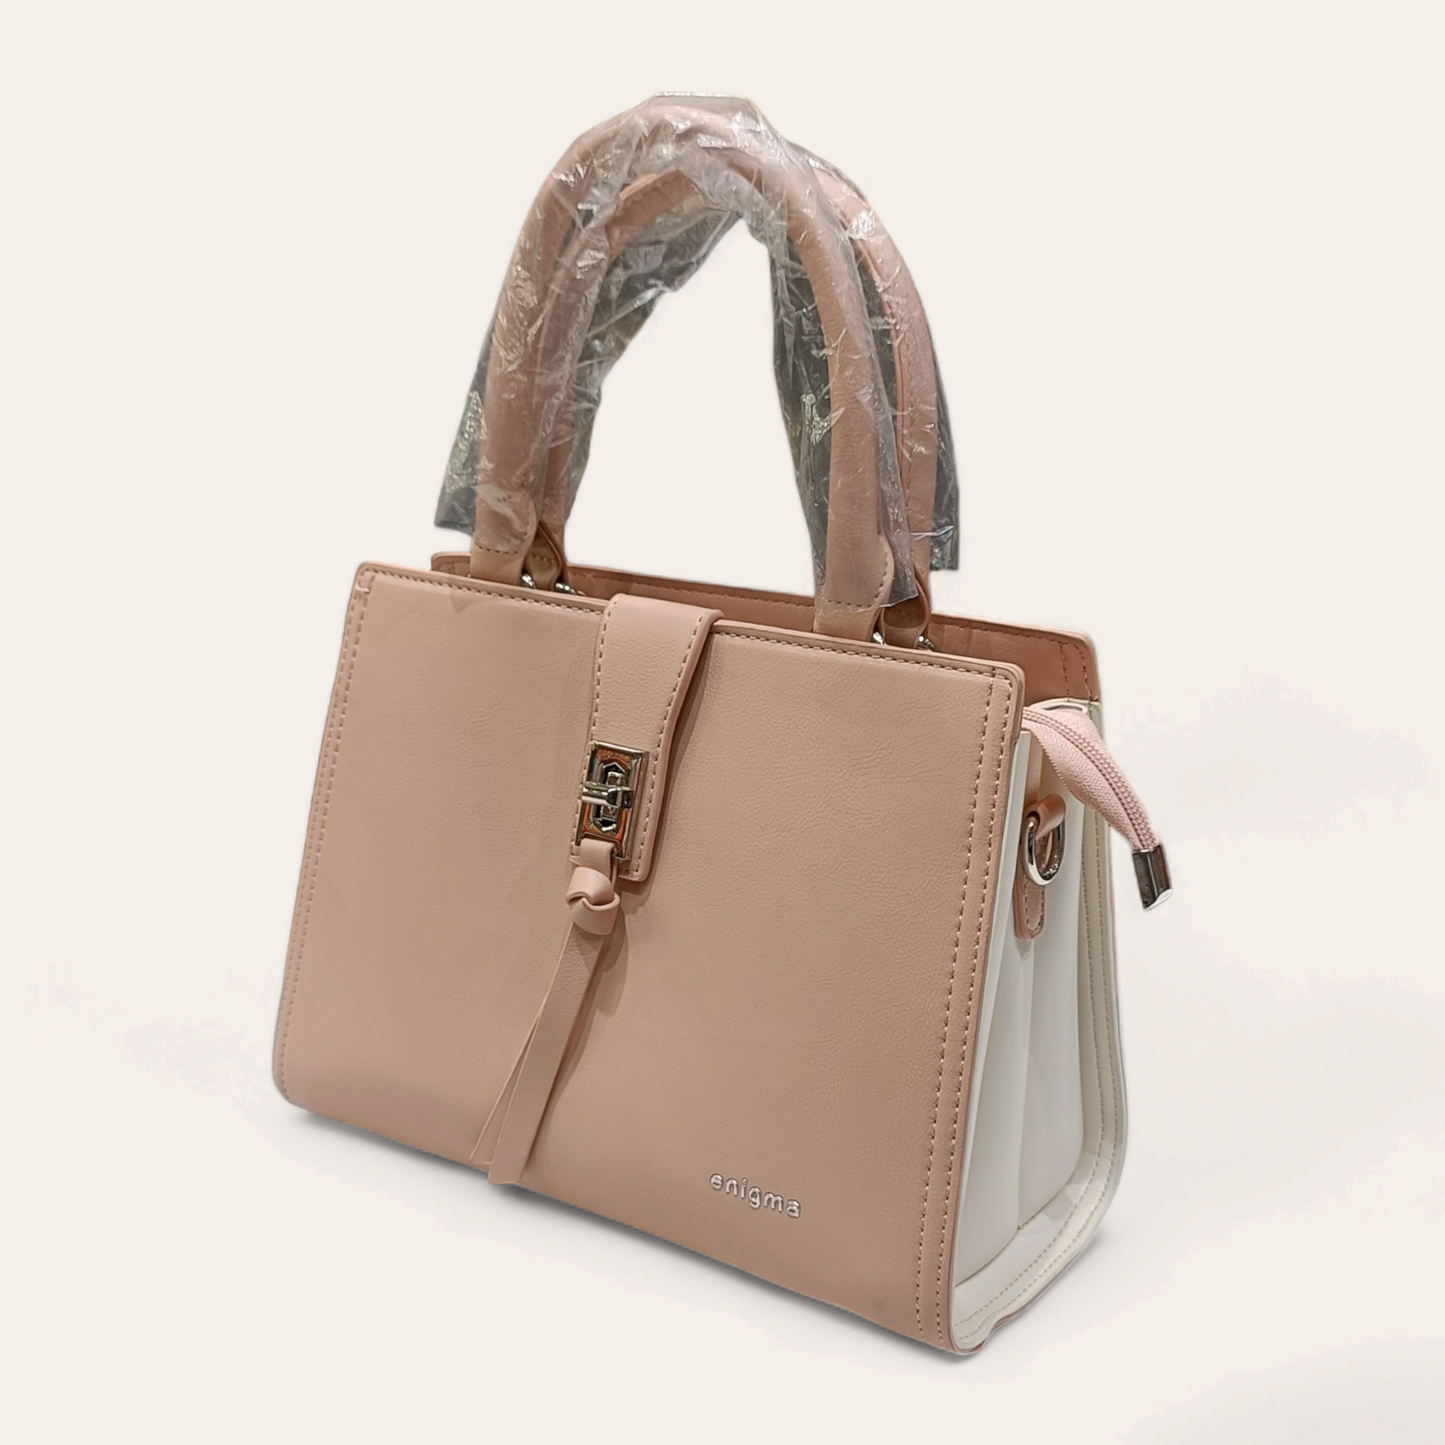 Enigma Party wear | Bridal handbag with sling belt